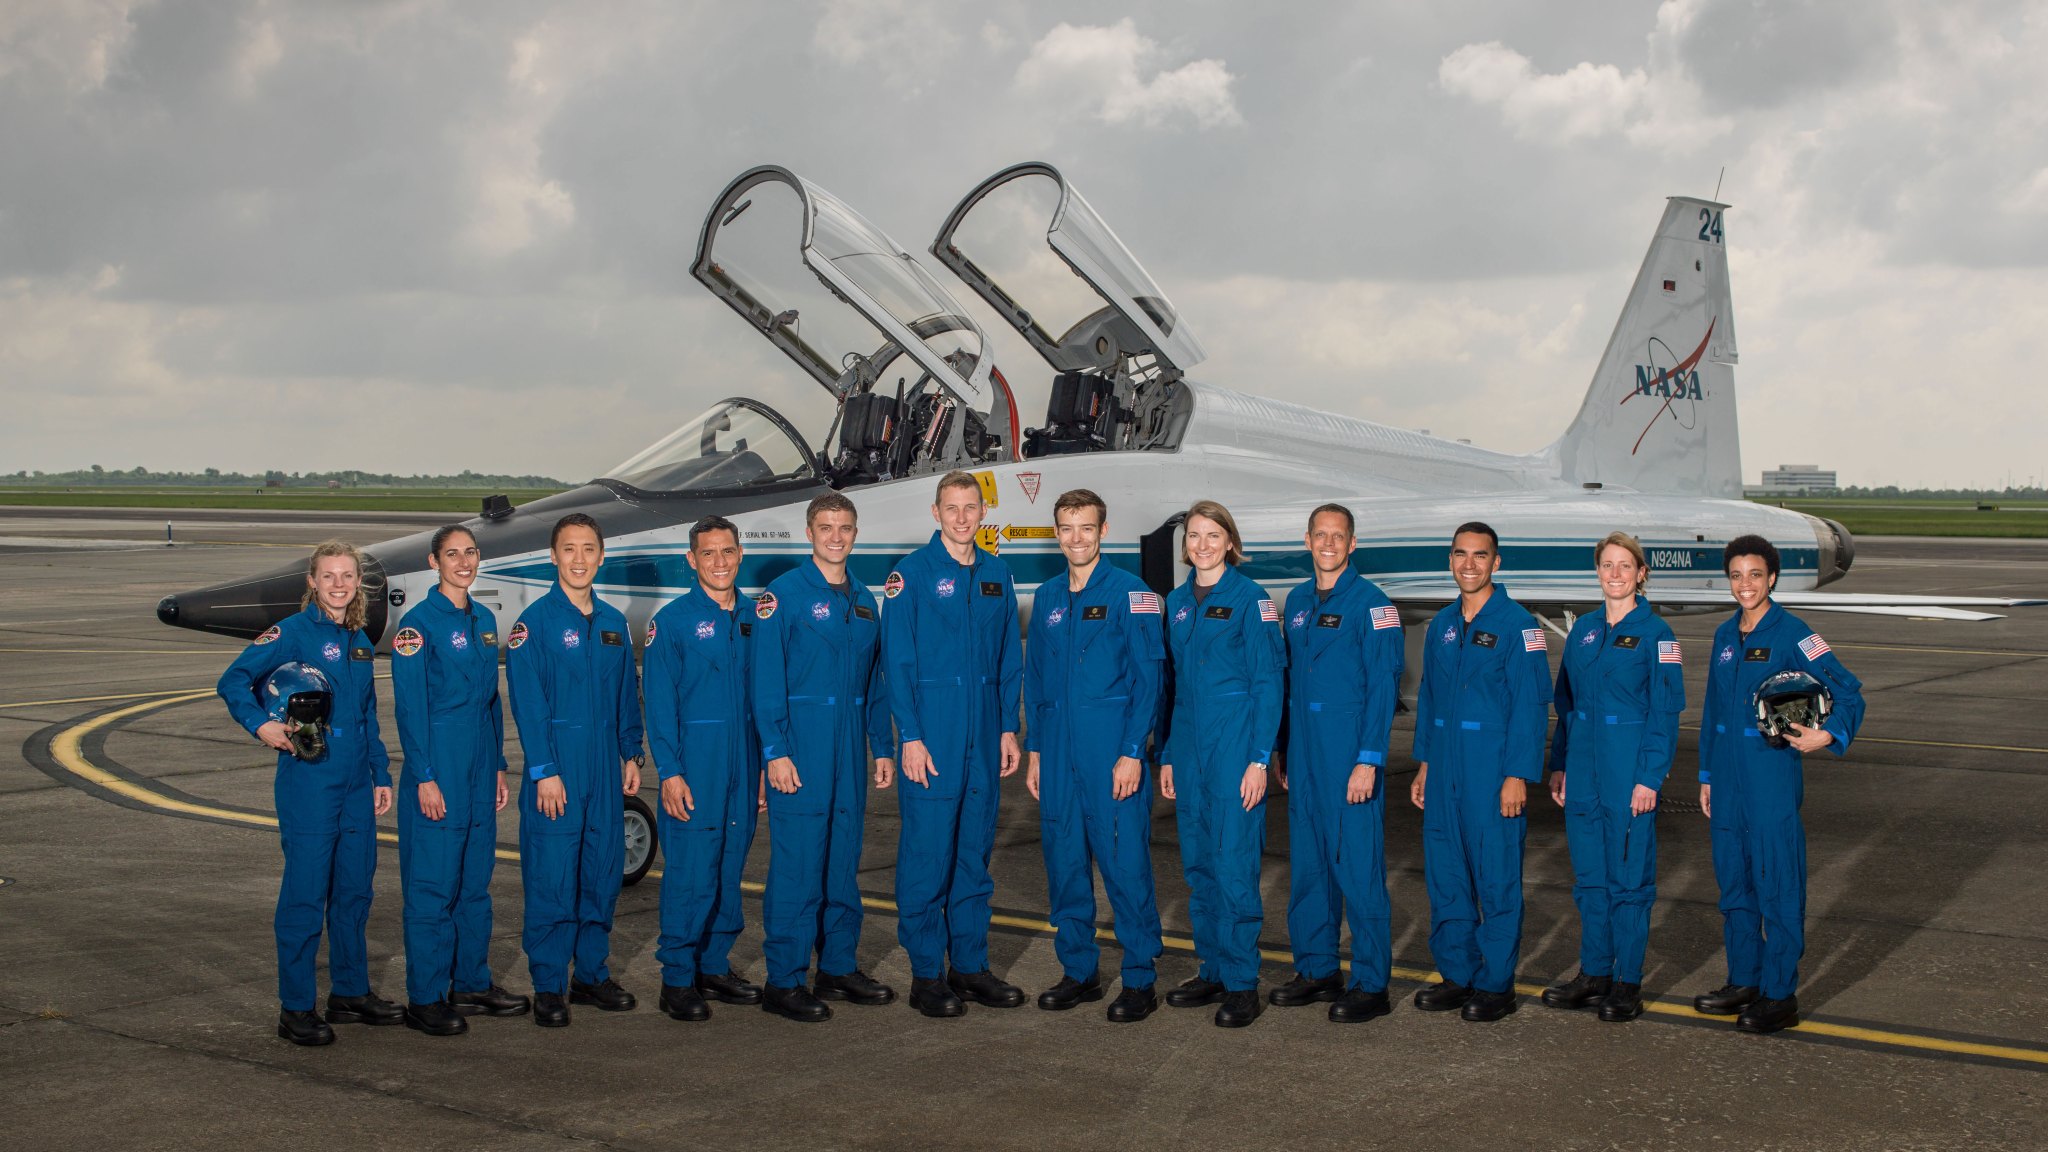 The 2017 NASA astronaut class.